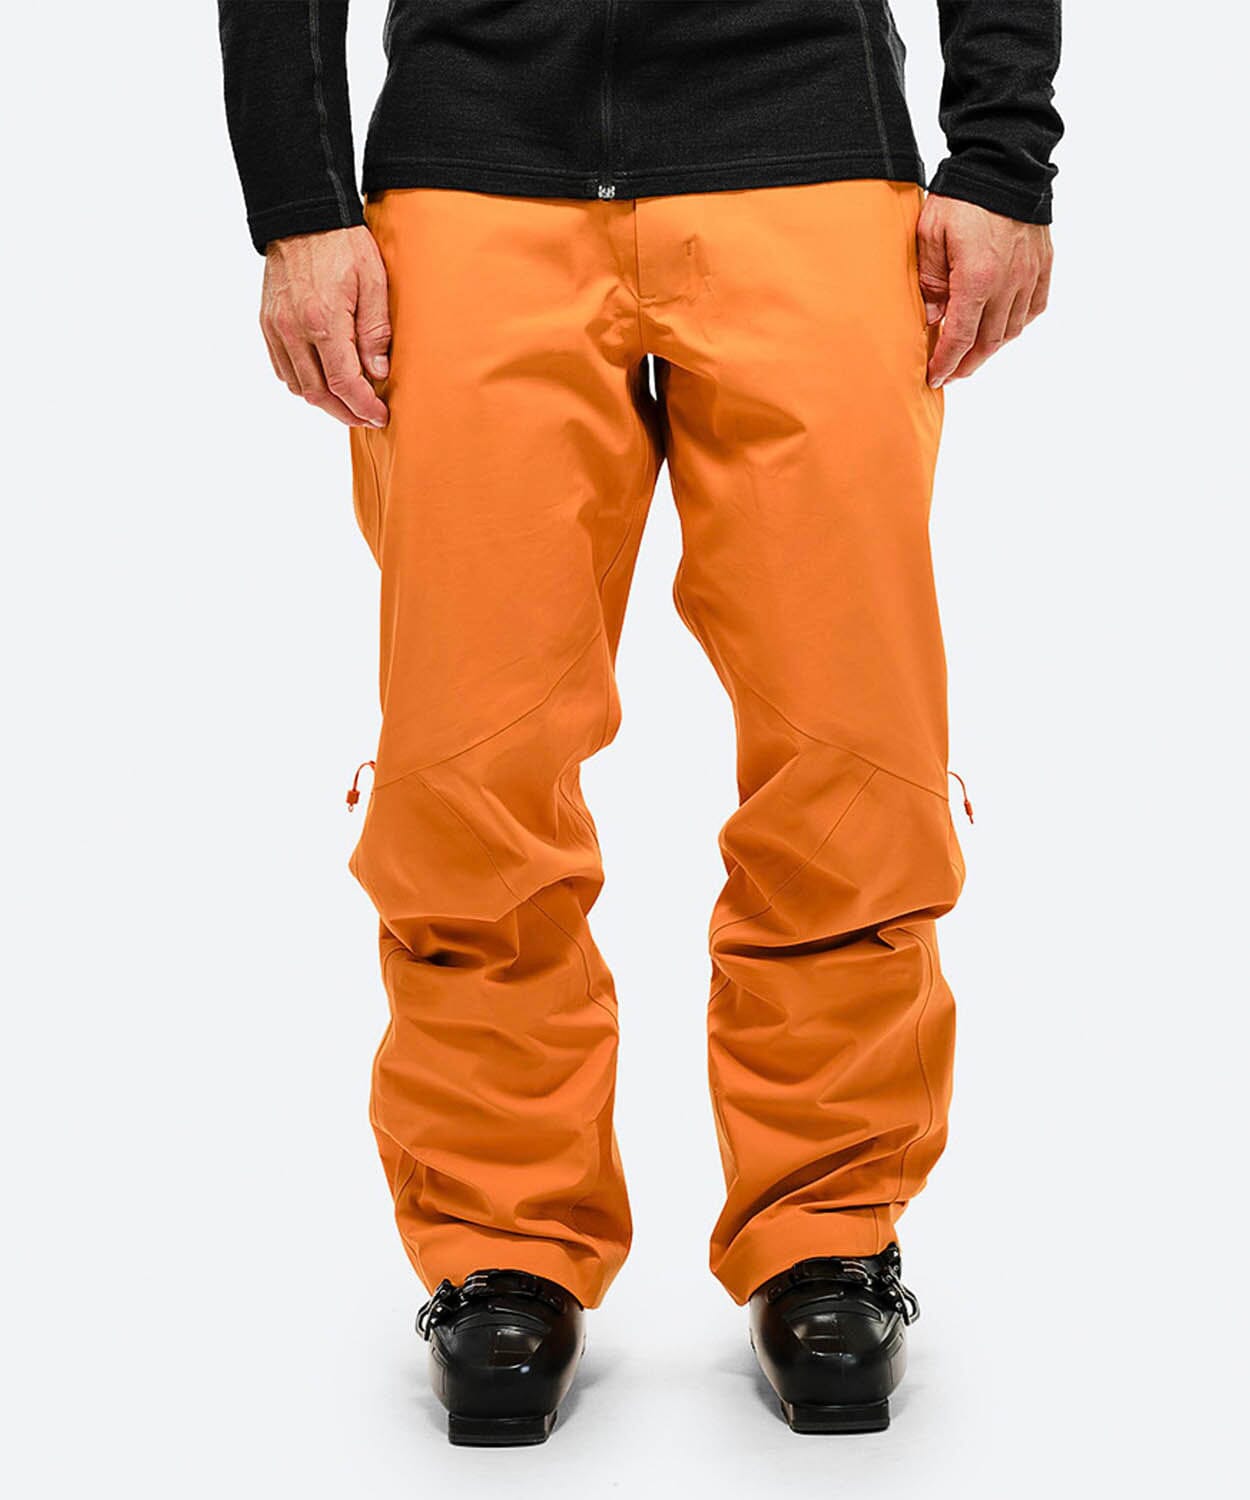 Y-3 Men's GORE-TEX PRO 3L Soft Backing Pant Ski Pants The Mountain Studio Burnt Orange S 